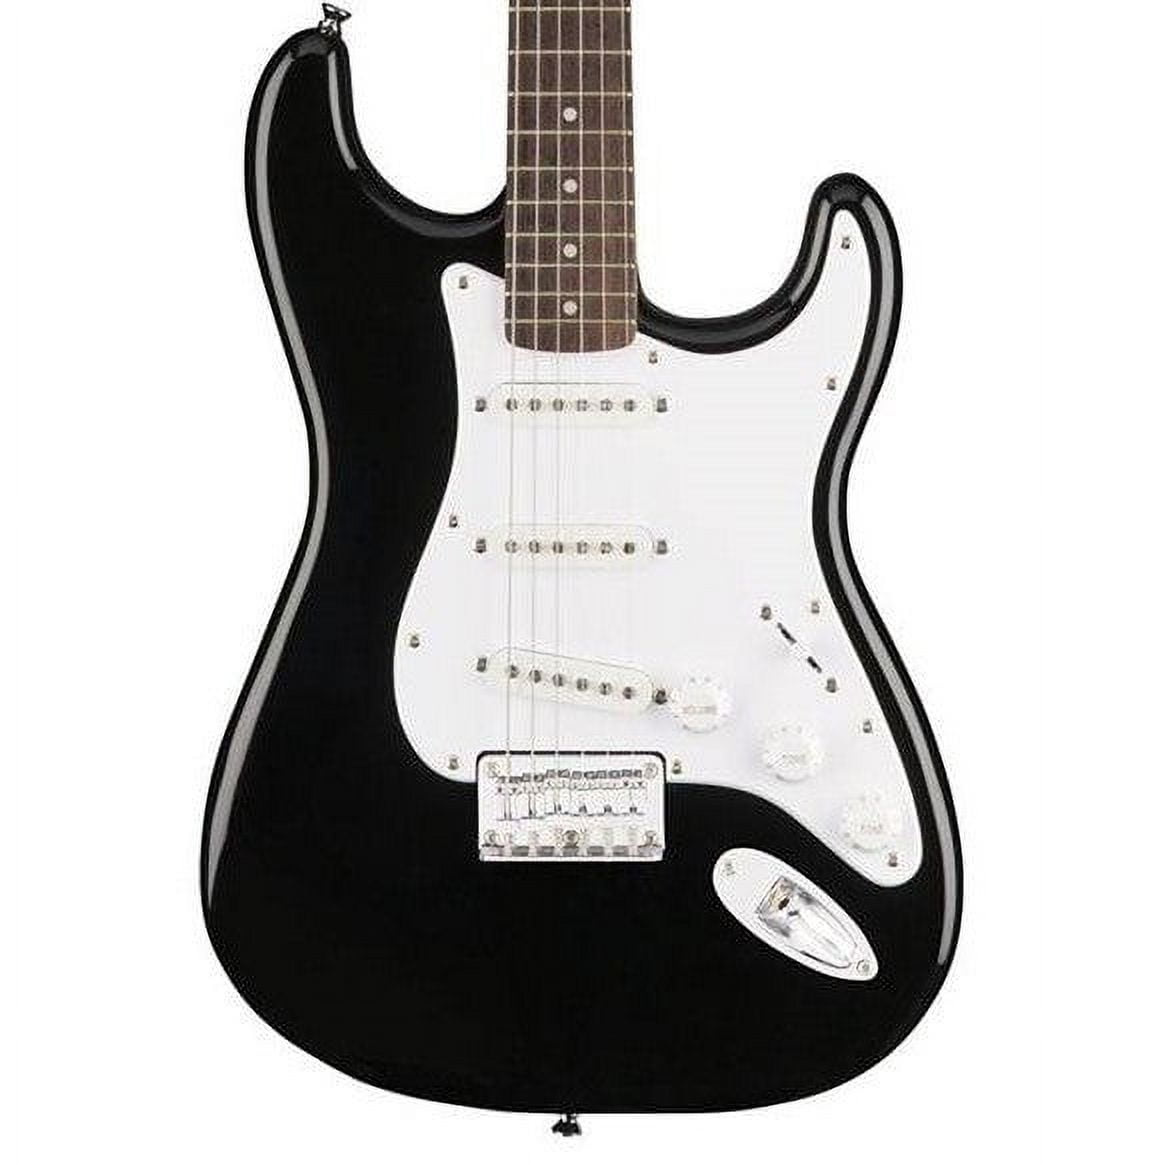 Squier Bullet Strat HT Electric Guitar (Black) - Walmart.com